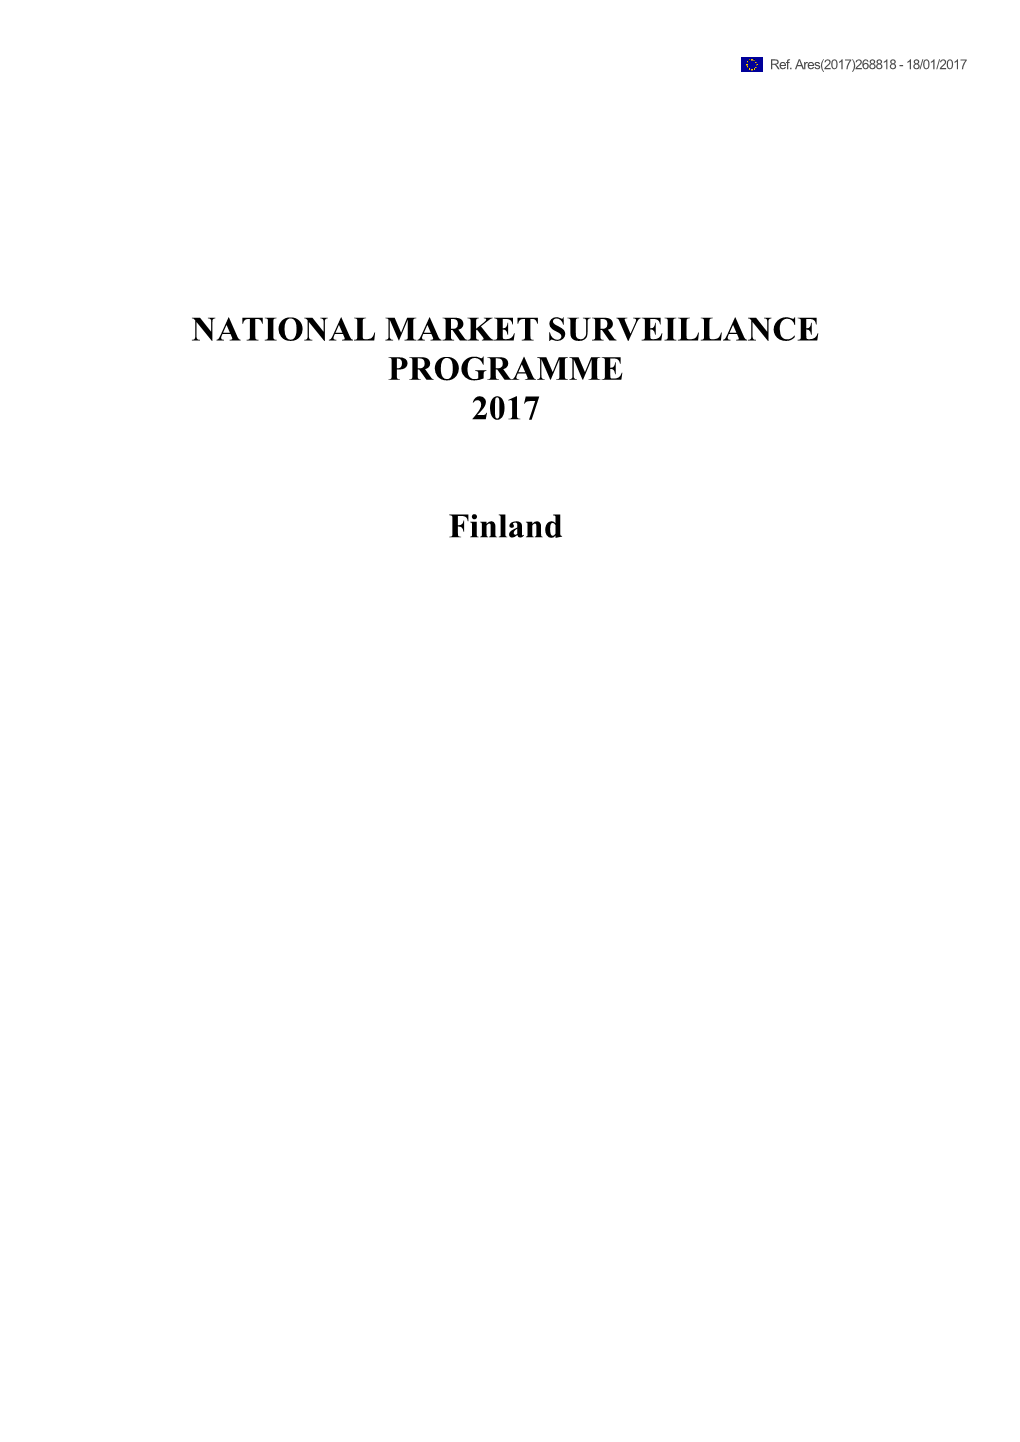 NATIONAL MARKET SURVEILLANCE PROGRAMME 2017 Finland